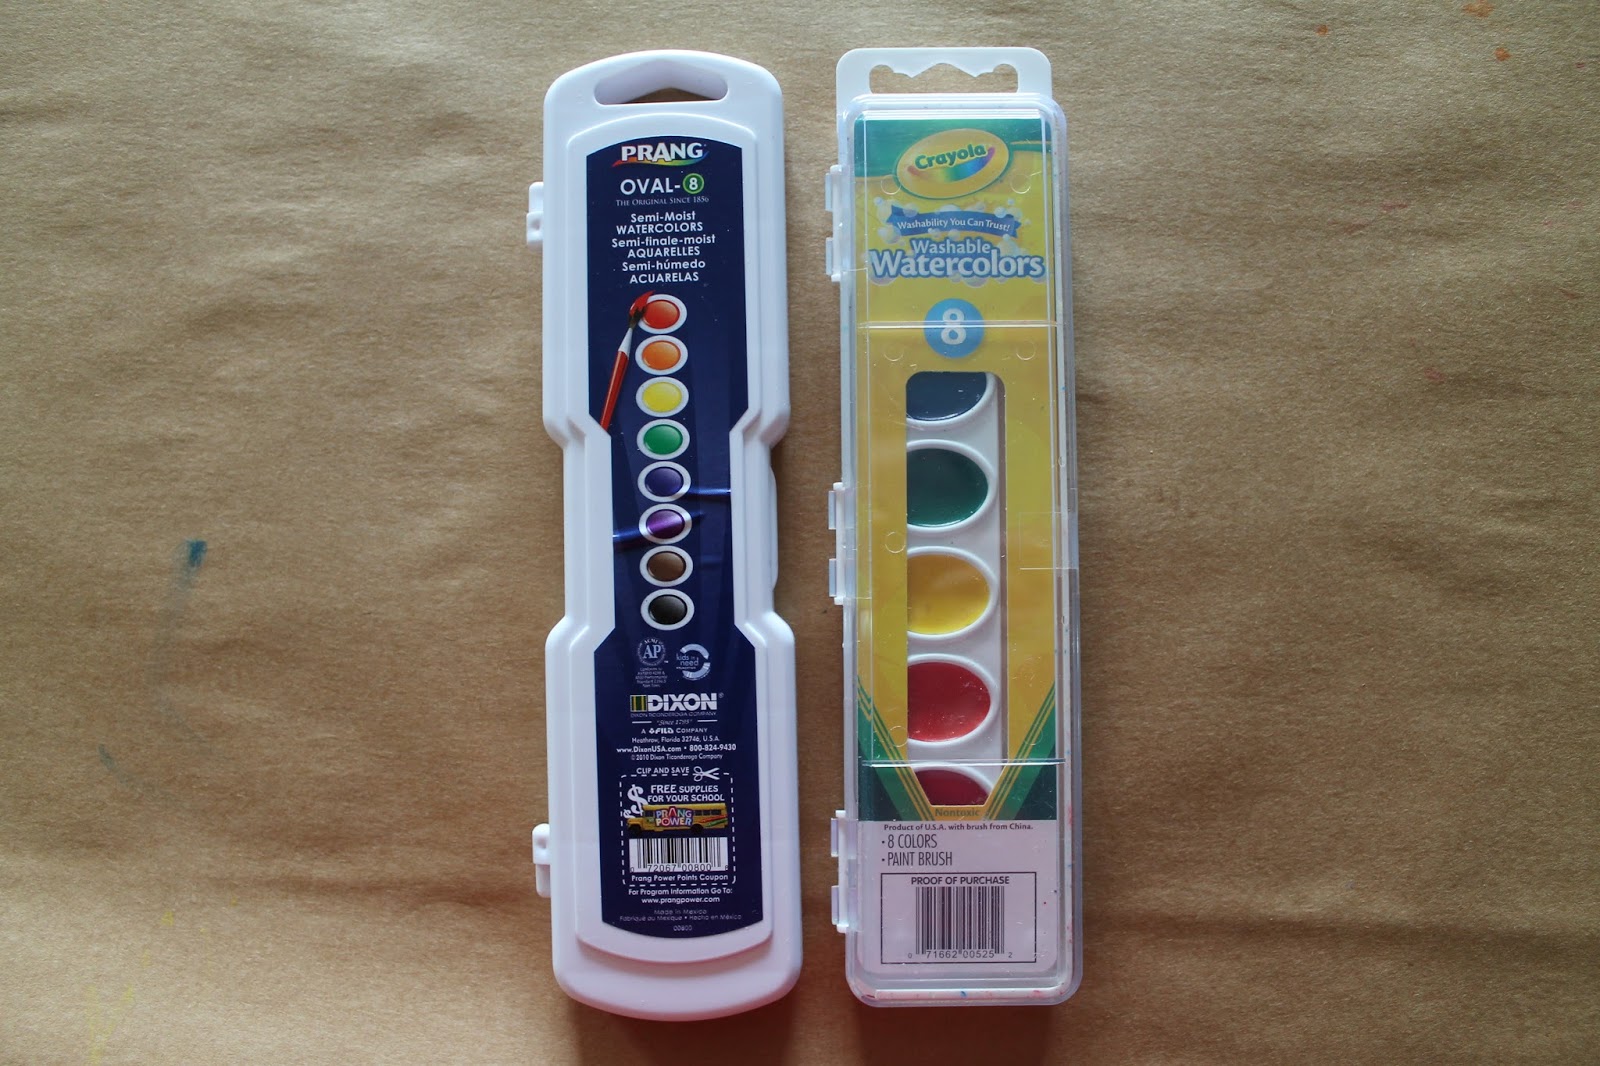 Mini Matisse: Comparing Products: Prang Watercolors vs. Crayola Watercolors